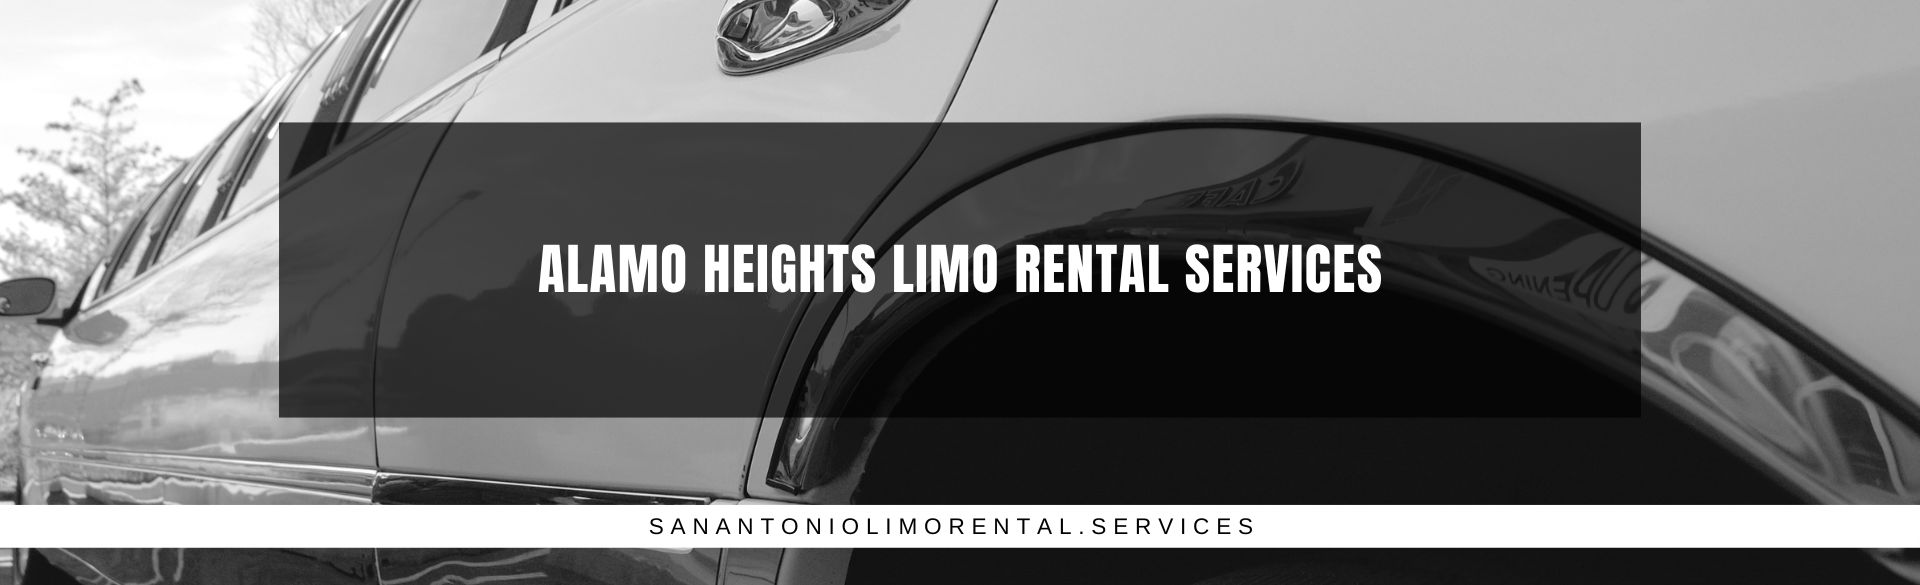 Alamo Heights Limo Rental Services